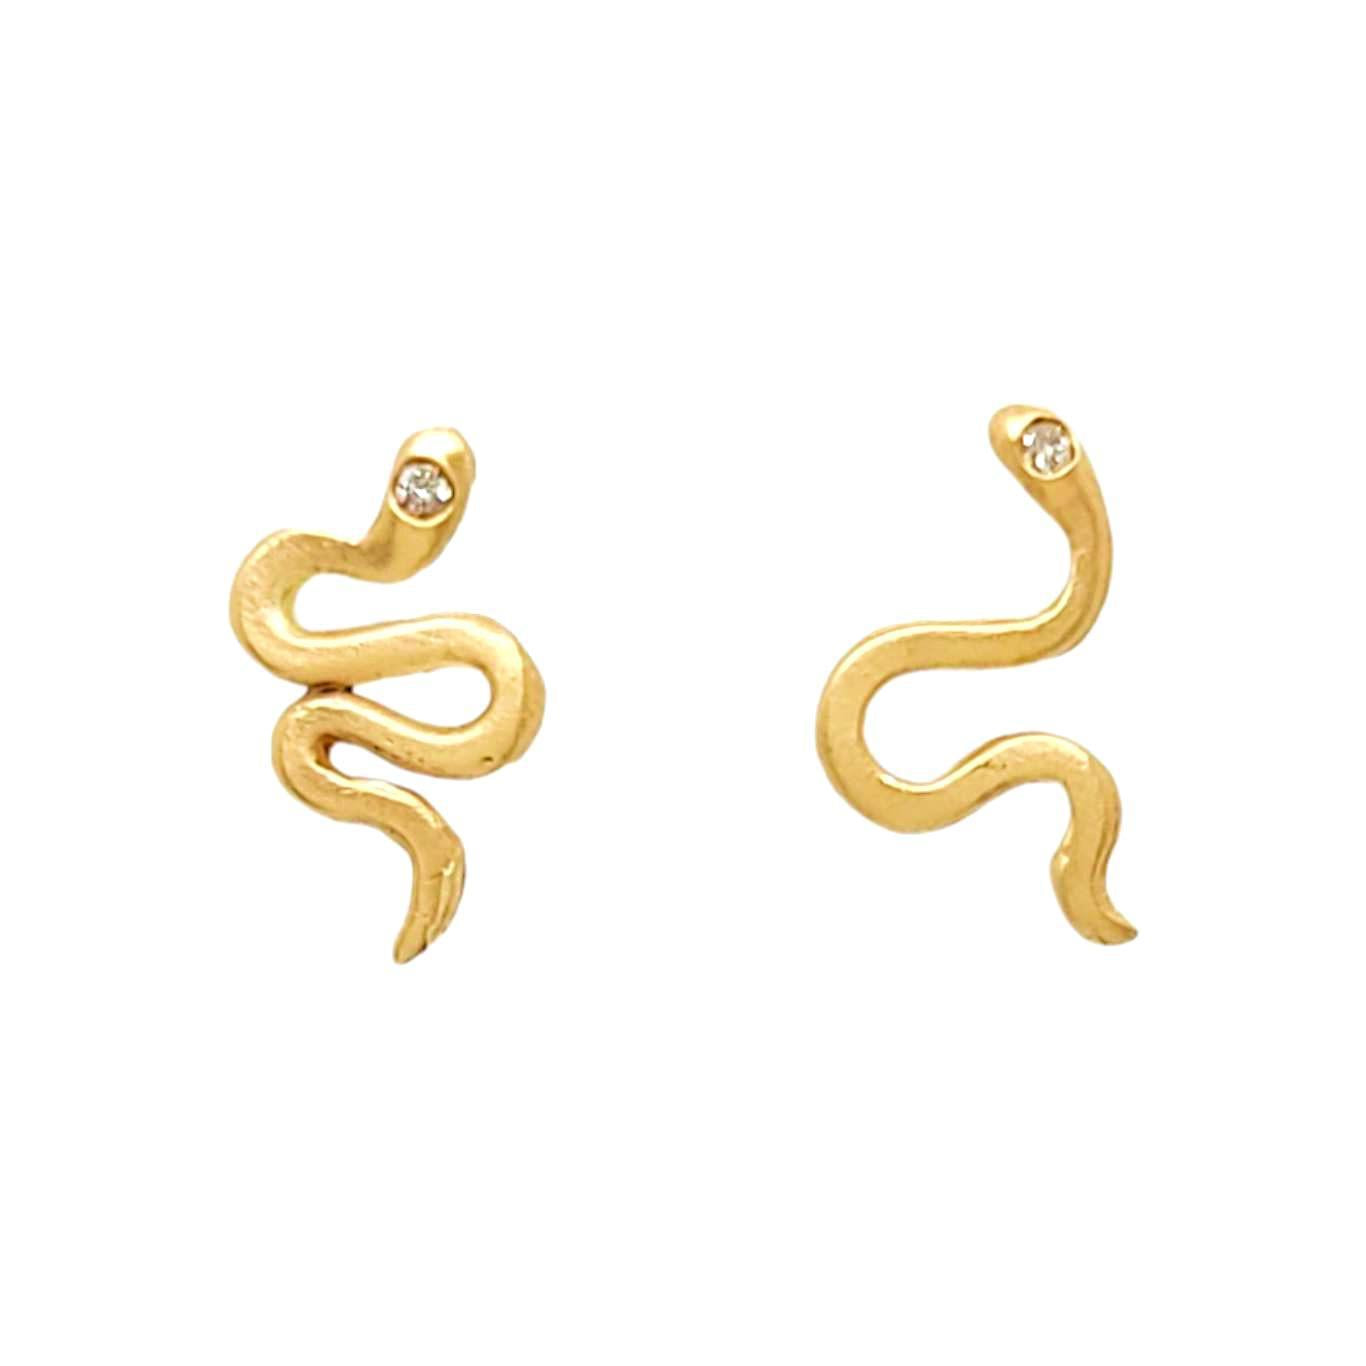 Earrings - Diamond-Eyed Asymmetric Snake Studs in 14k Yellow Gold by Michelle Chang